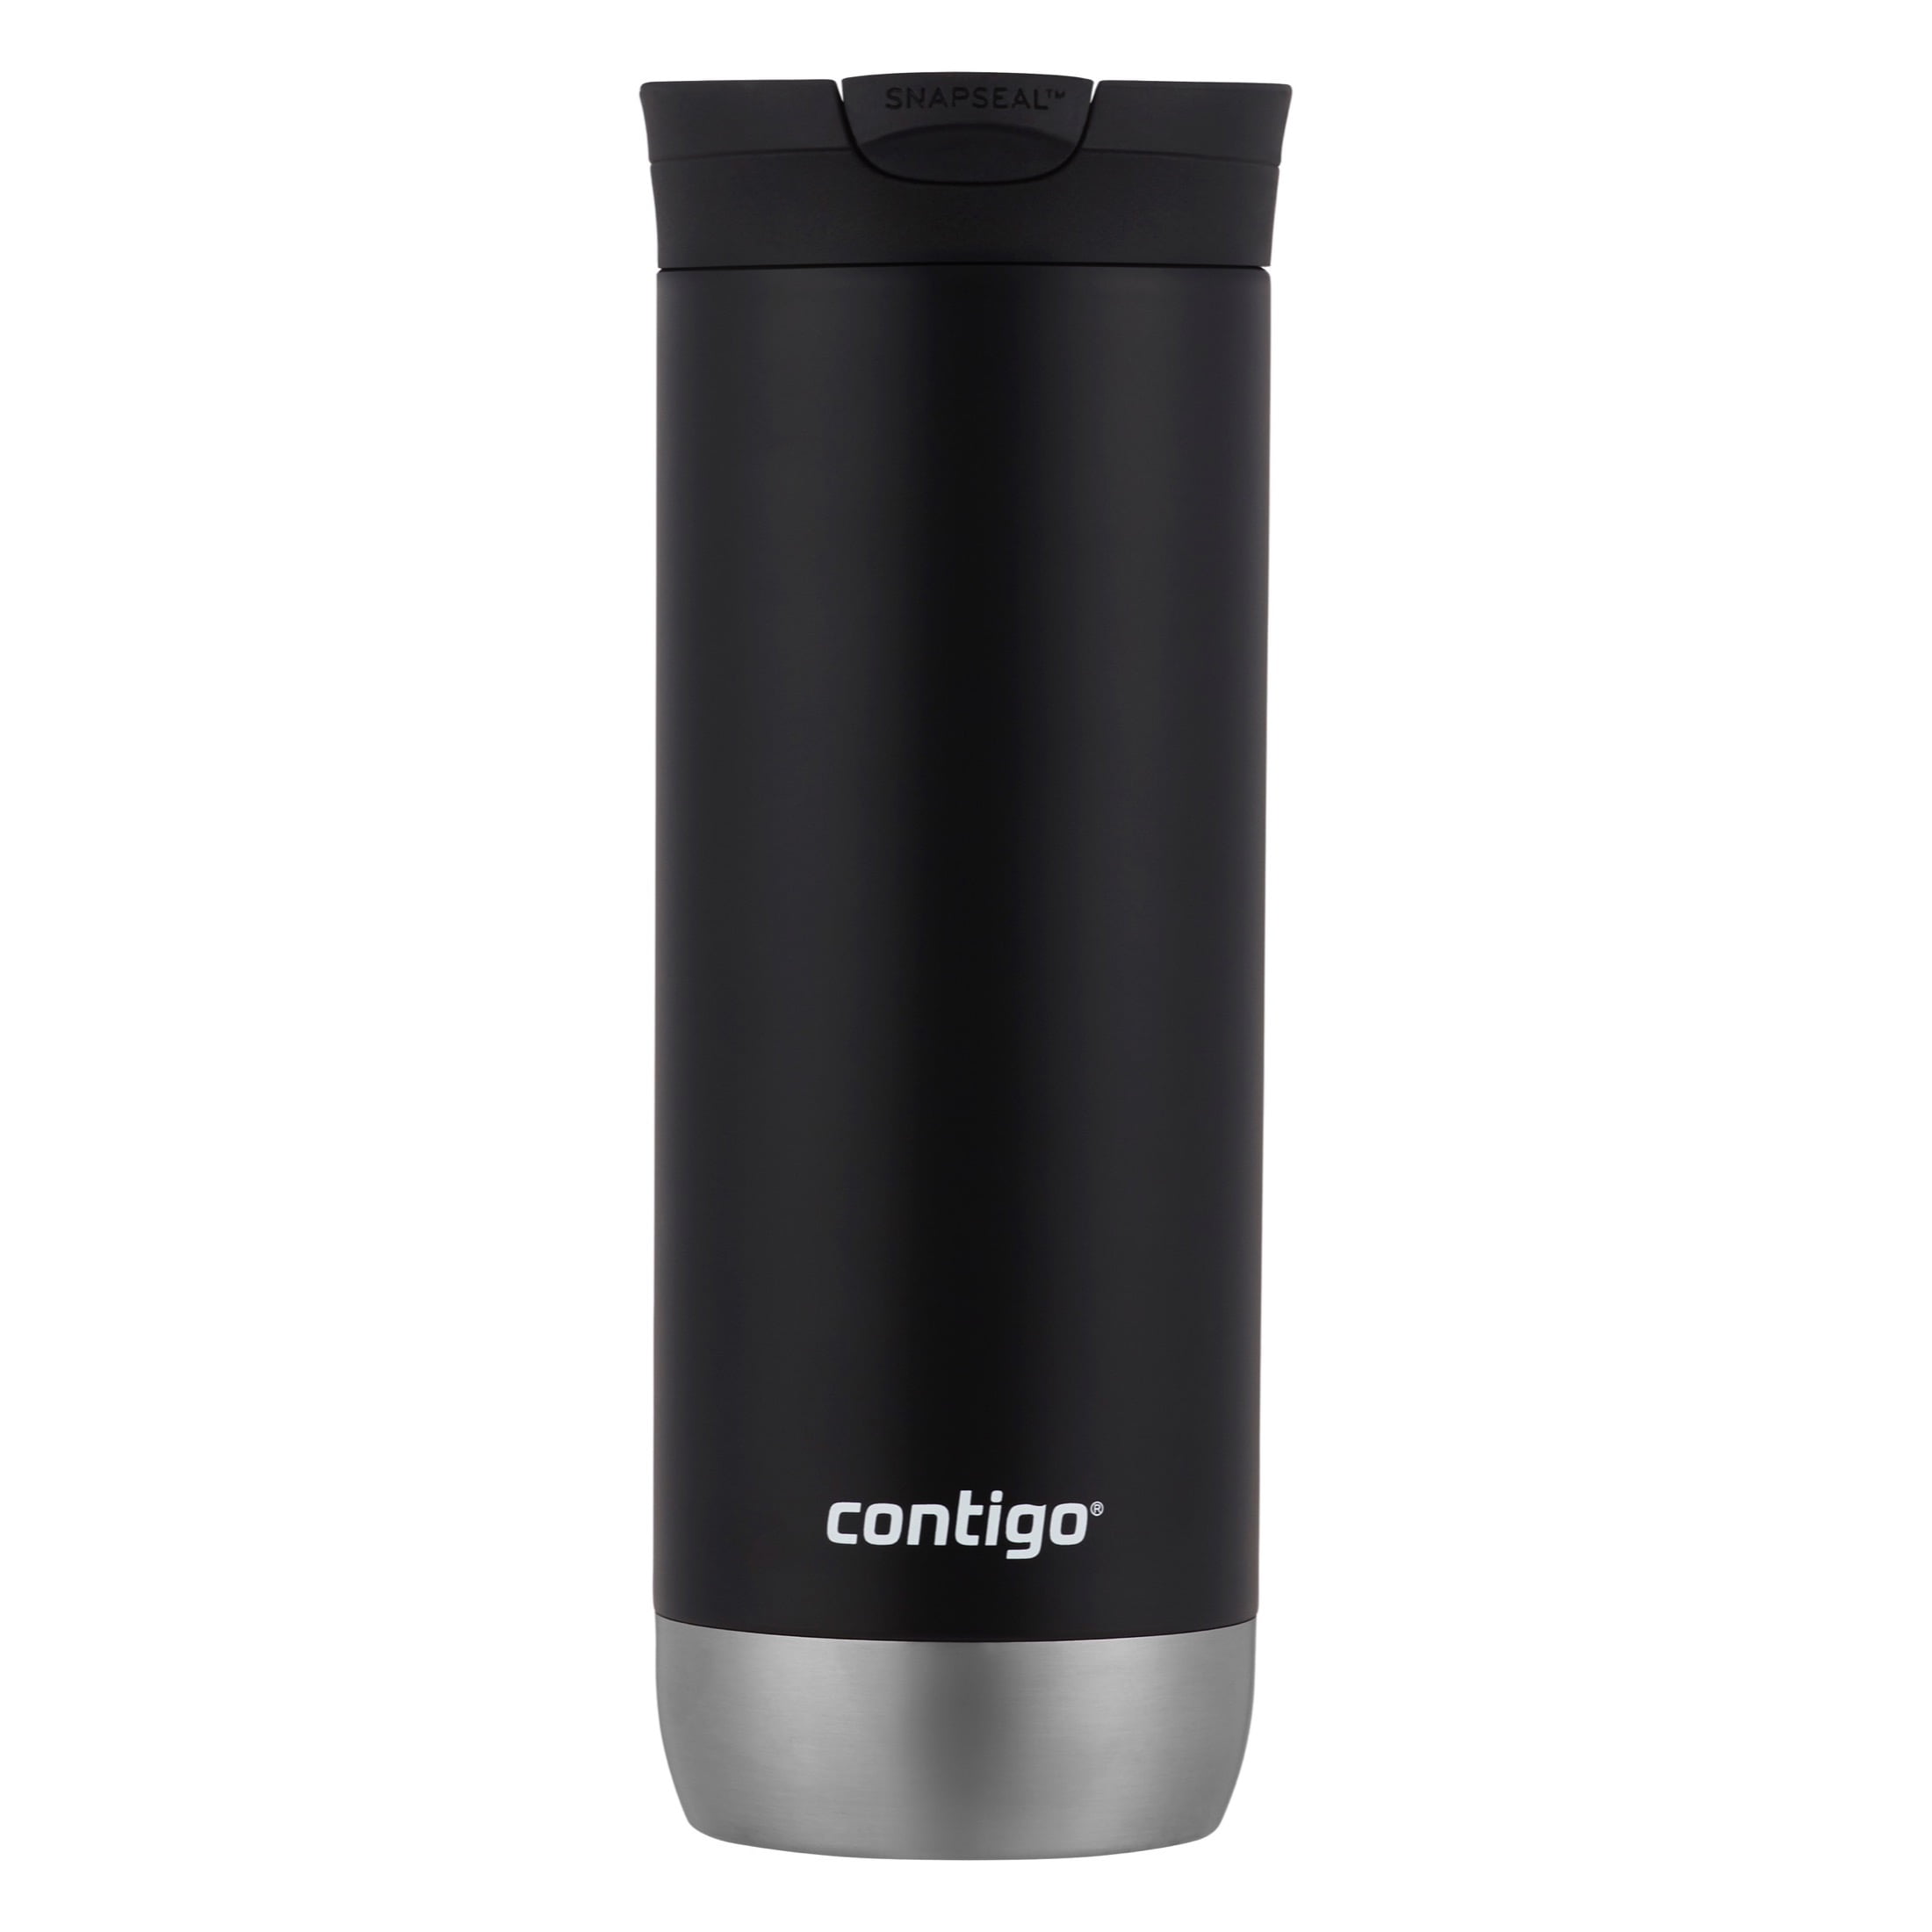 Contigo® Travel Mugs Make Gift Giving Easy